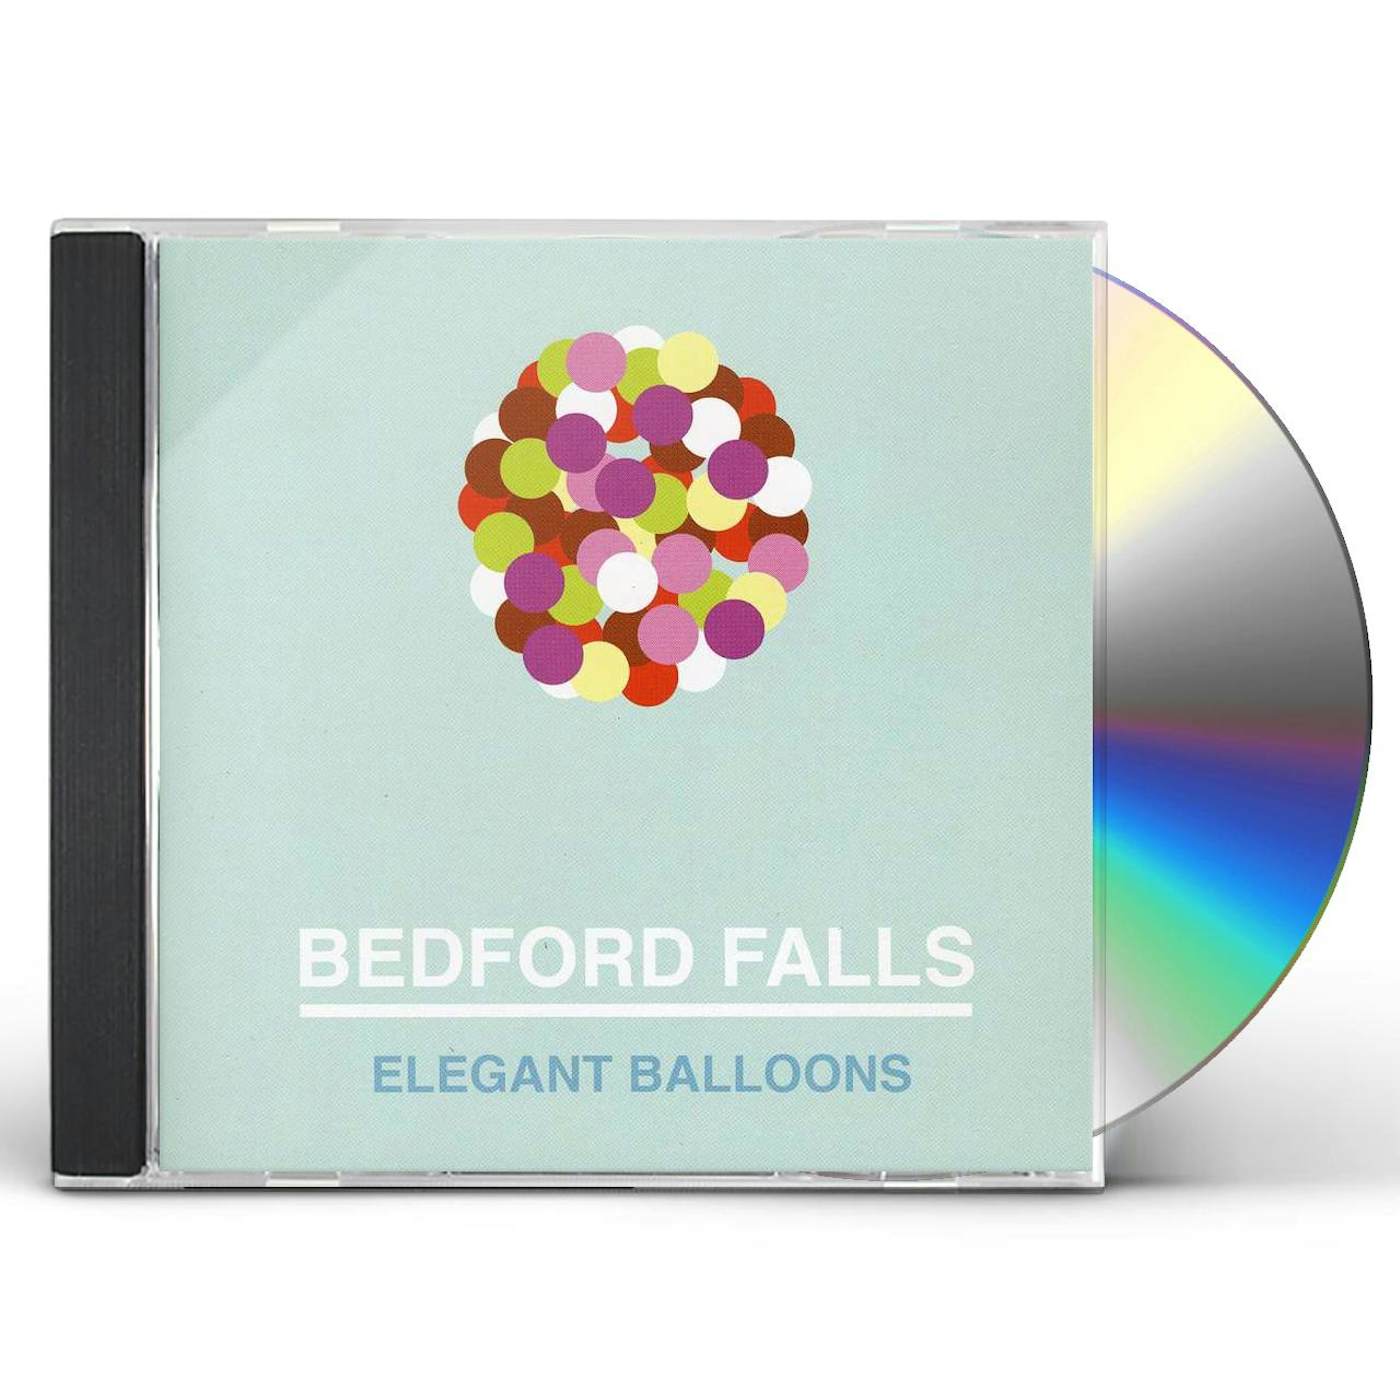 Bedford Falls ELEGANT BALLOONS CD